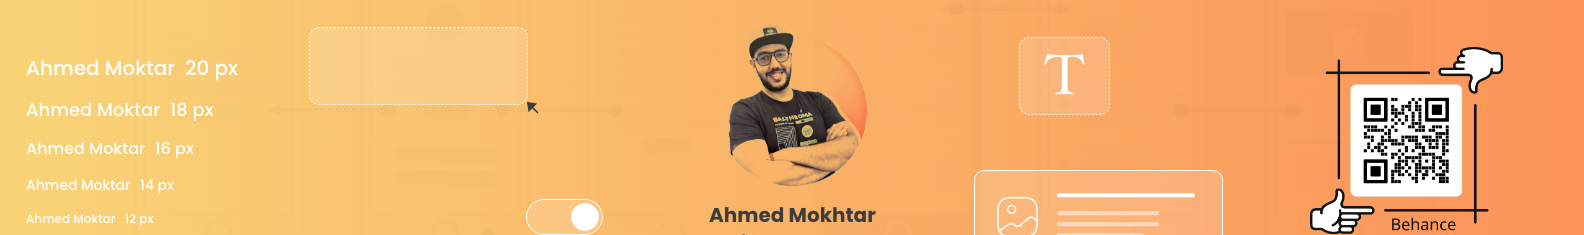 Profil-Banner von Ahmed Mokhtar